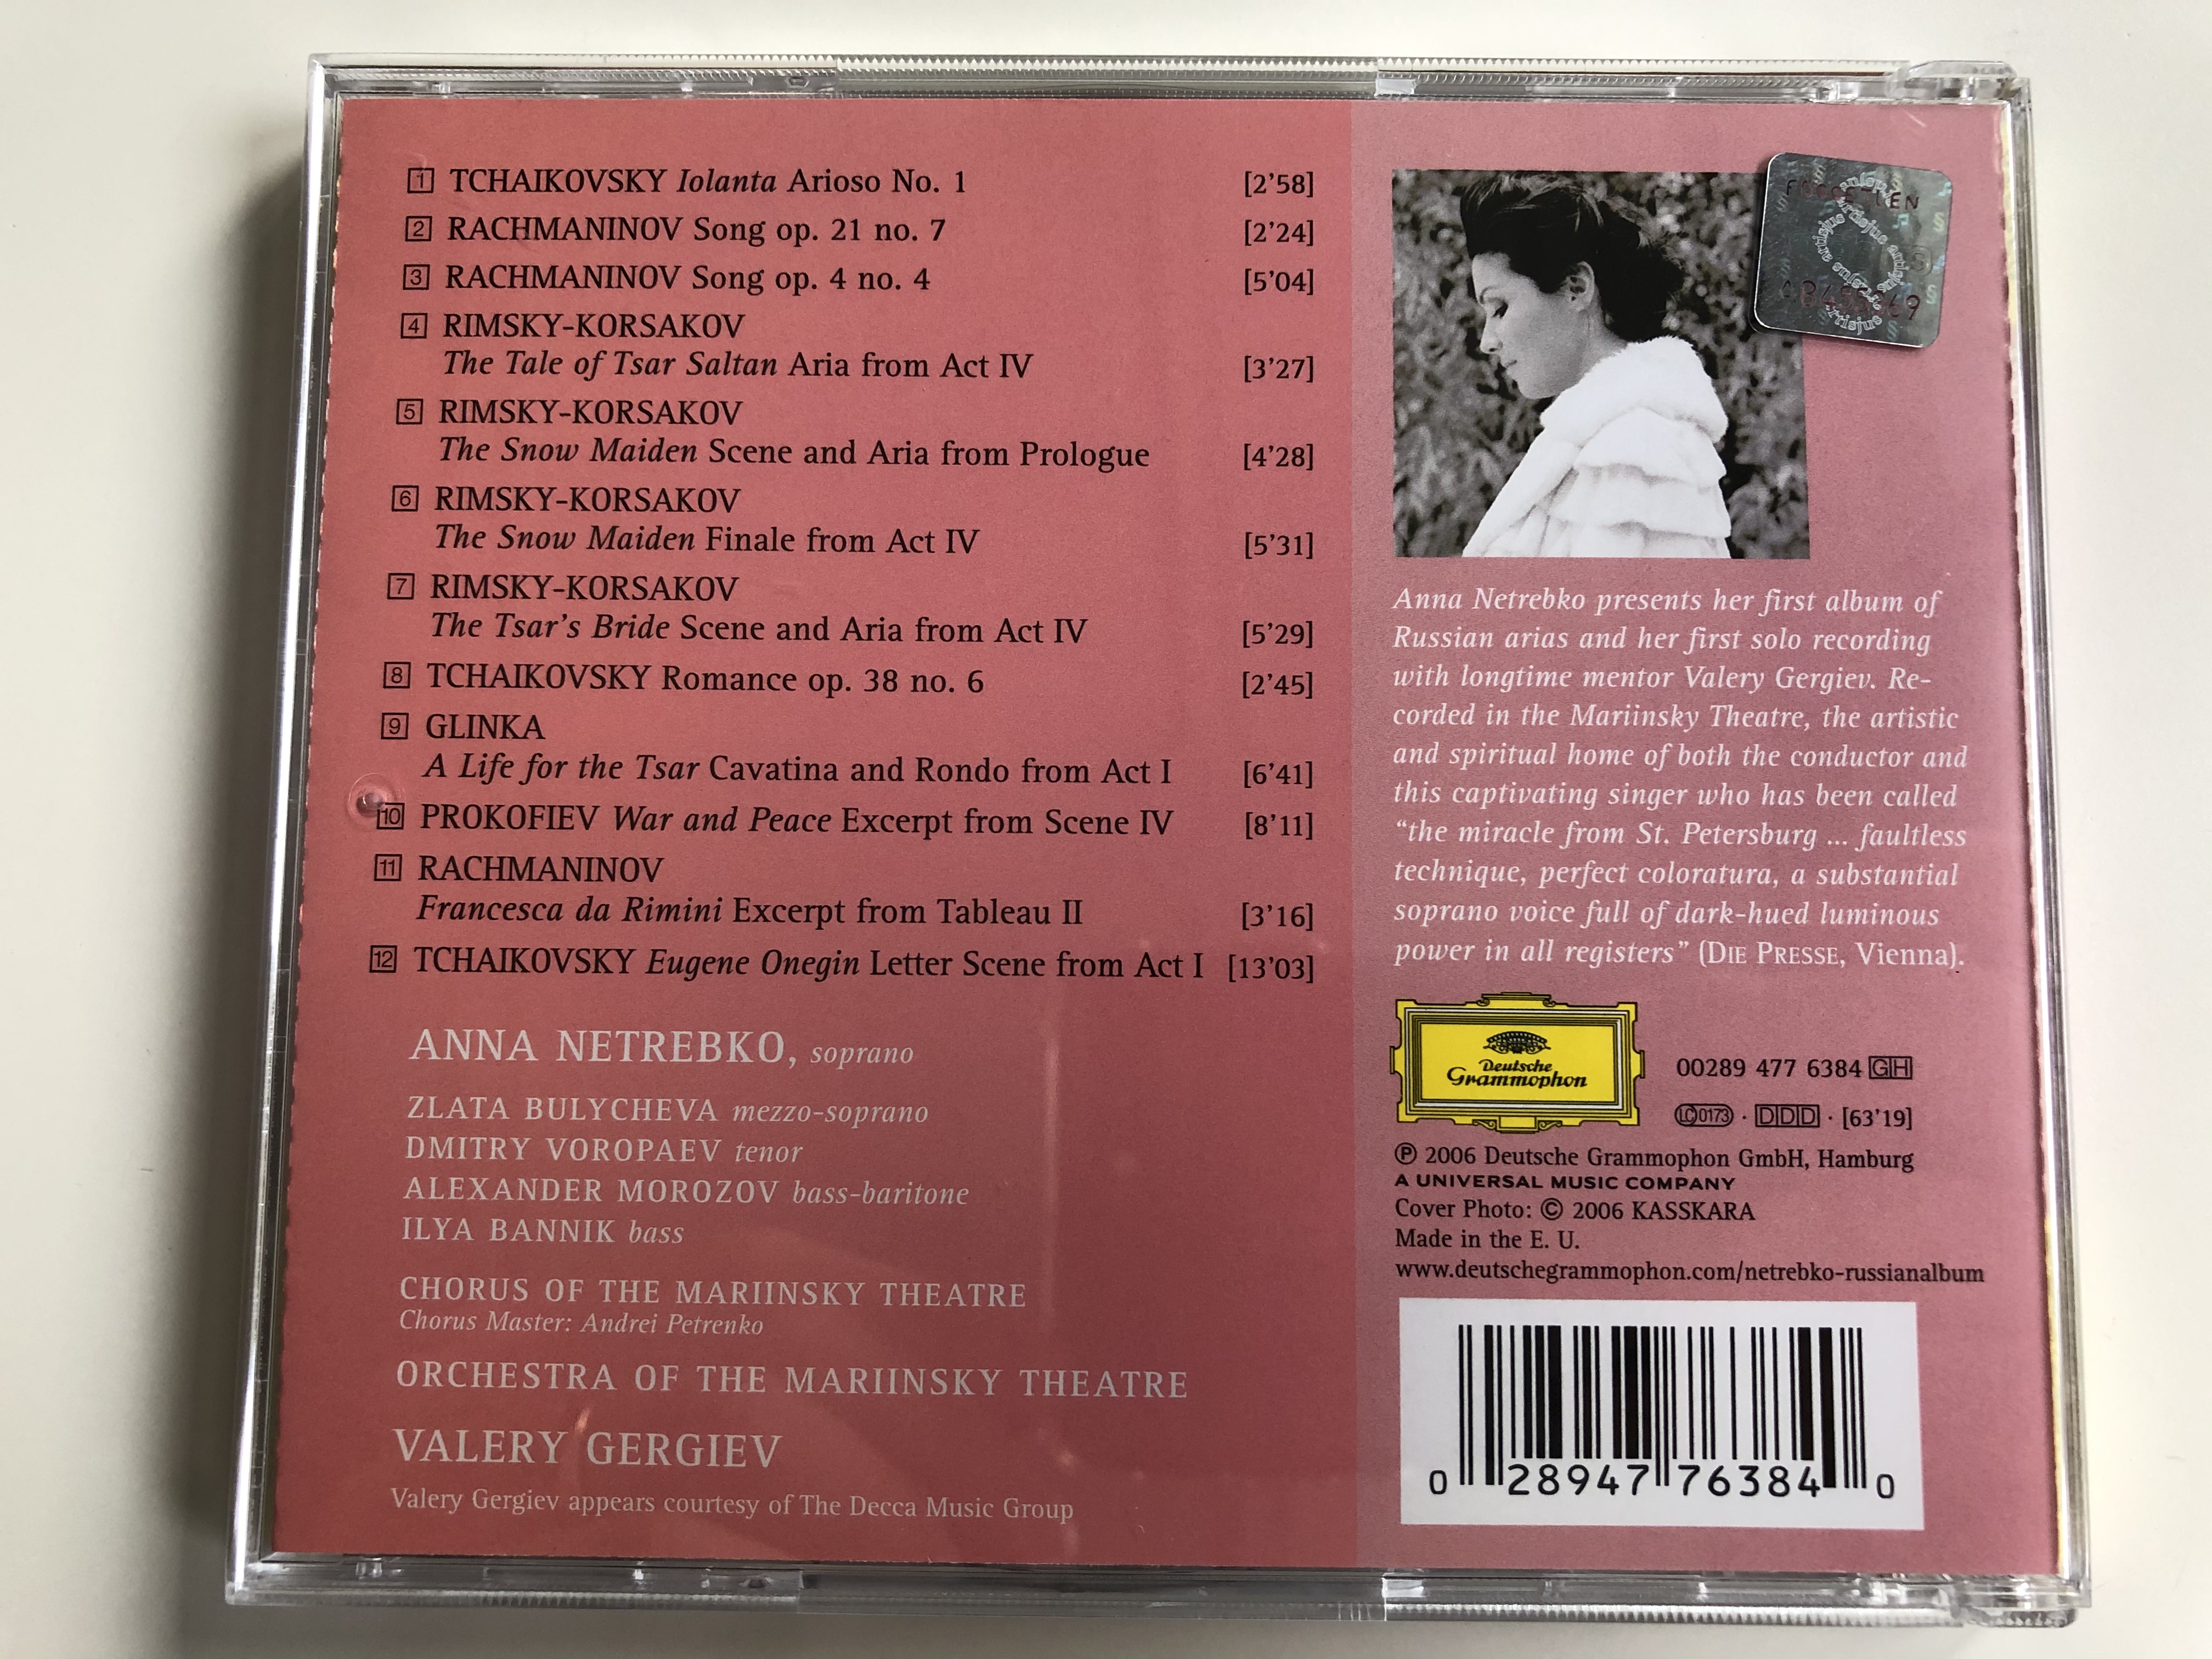 anna-netrebko-russian-album-orchestra-of-the-mariinsky-theatre-valery-gergiev-deutsche-grammophon-audio-cd-2006-00289-477-6384-3-.jpg